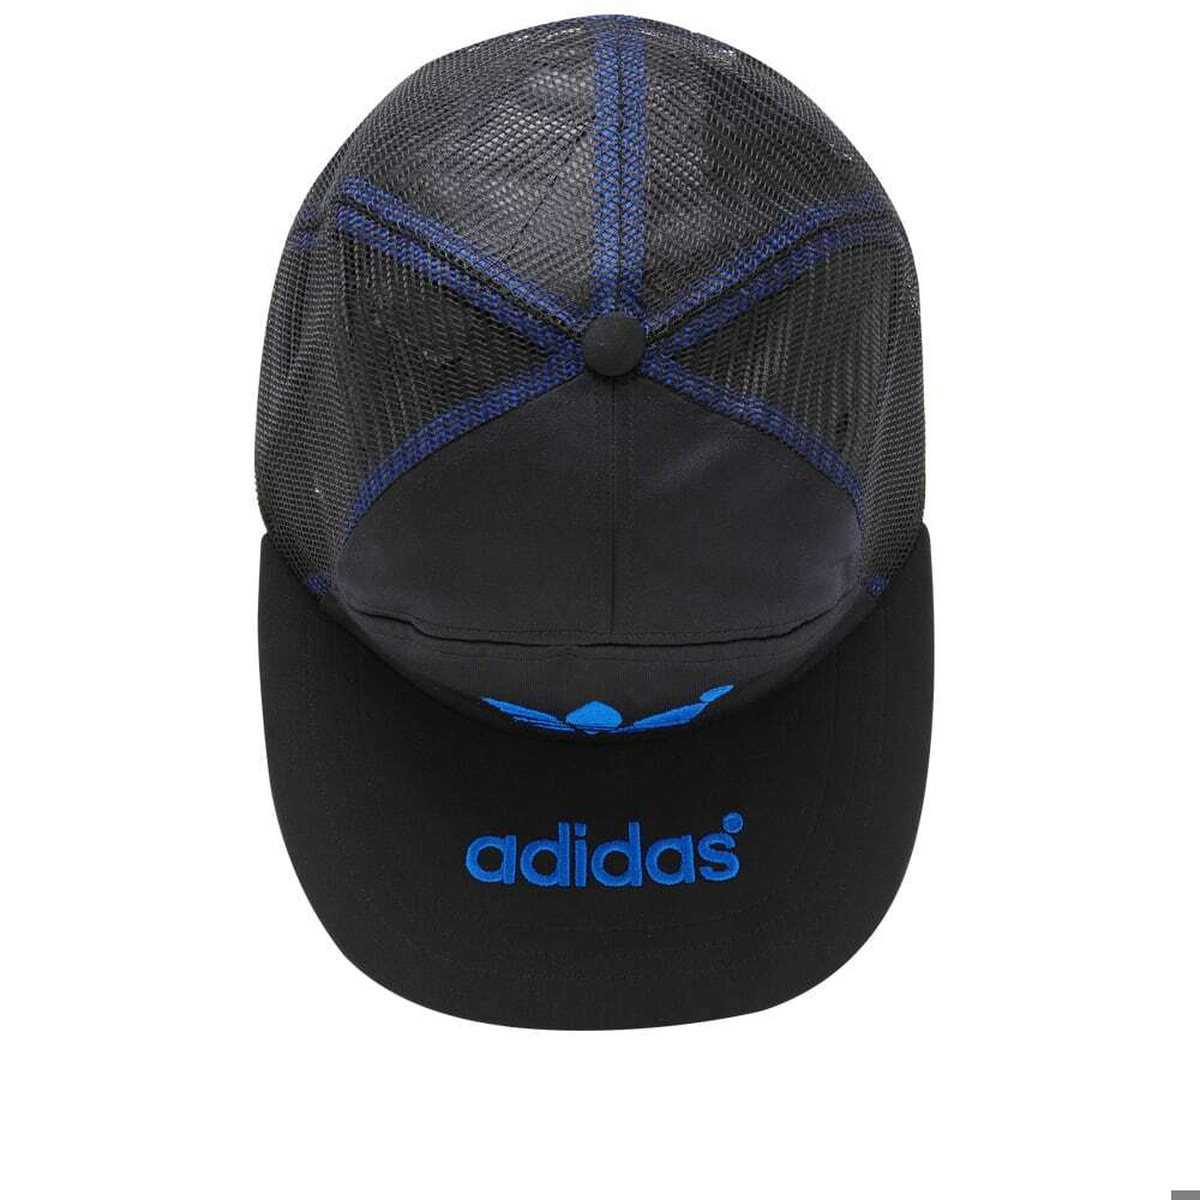 Adidas Blue Version Archive Cap in Black/Powder Blue adidas